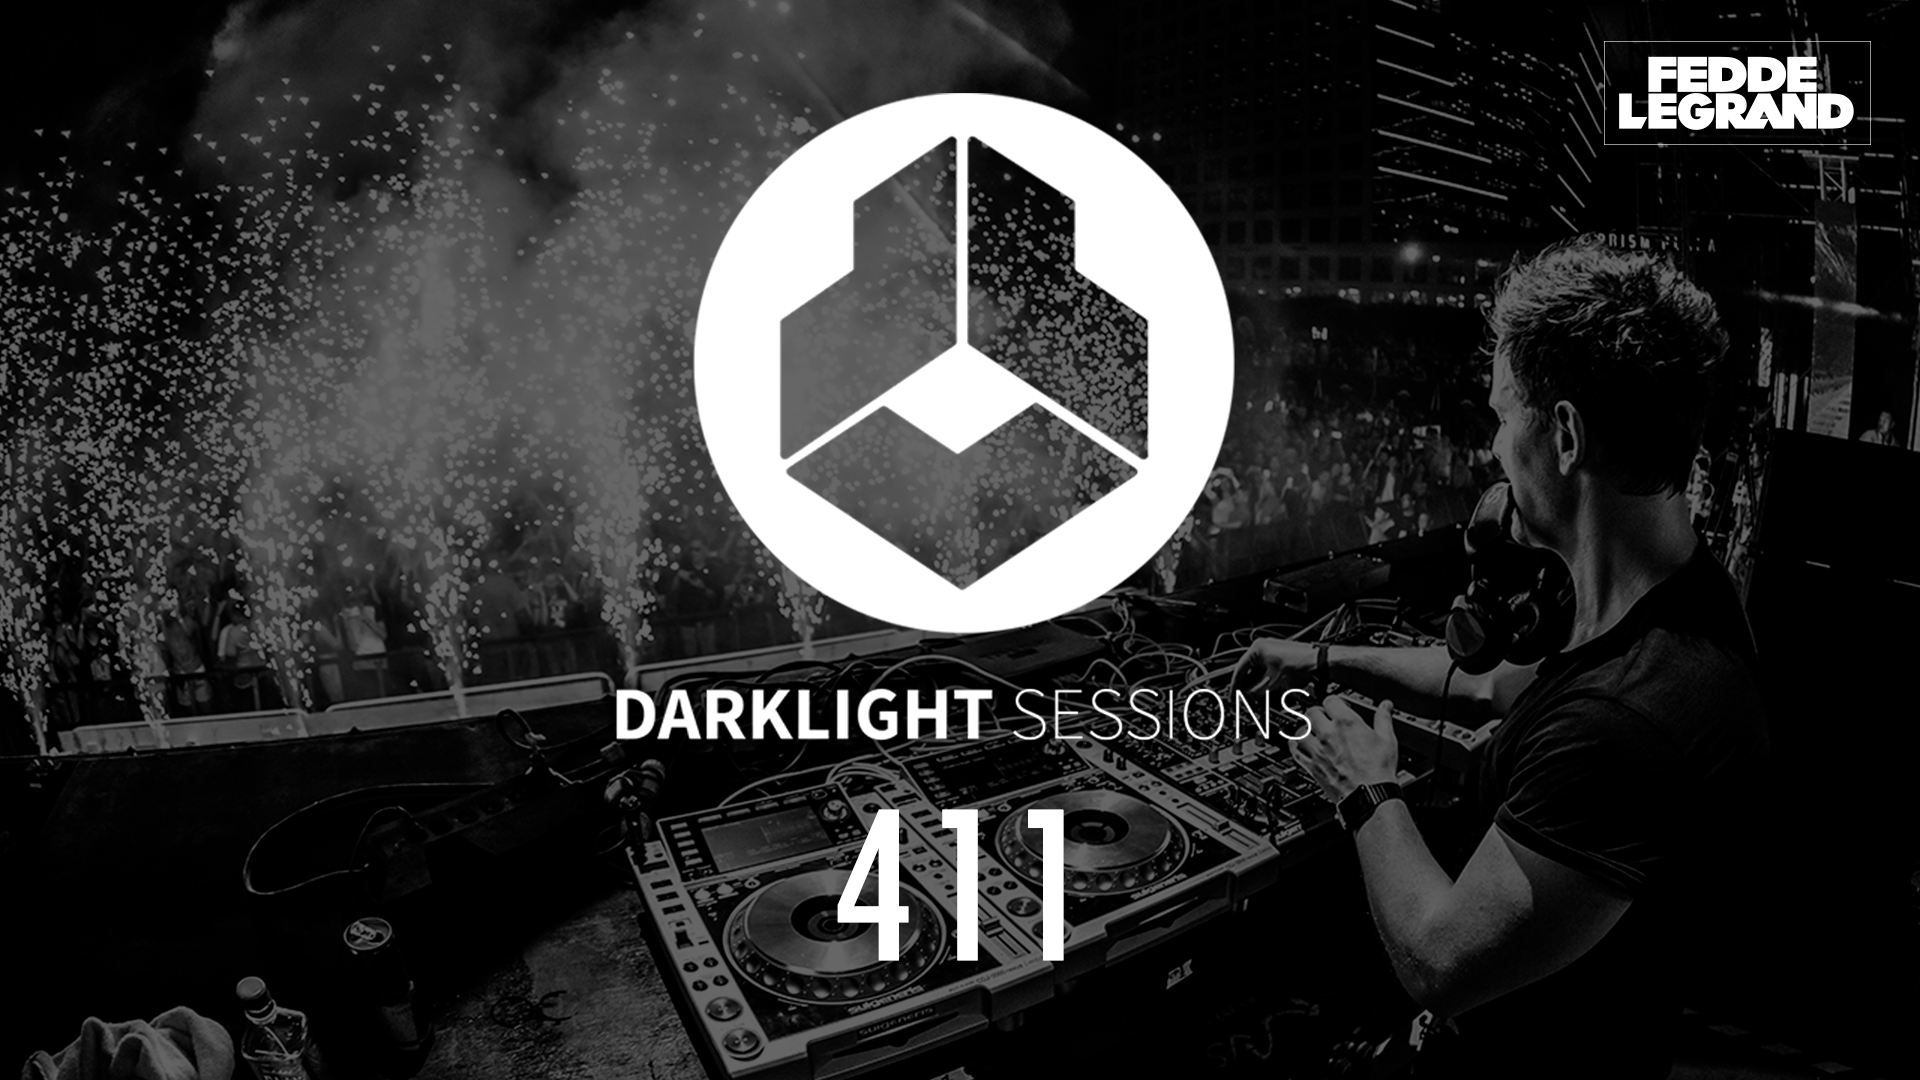 Darklight Sessions 411